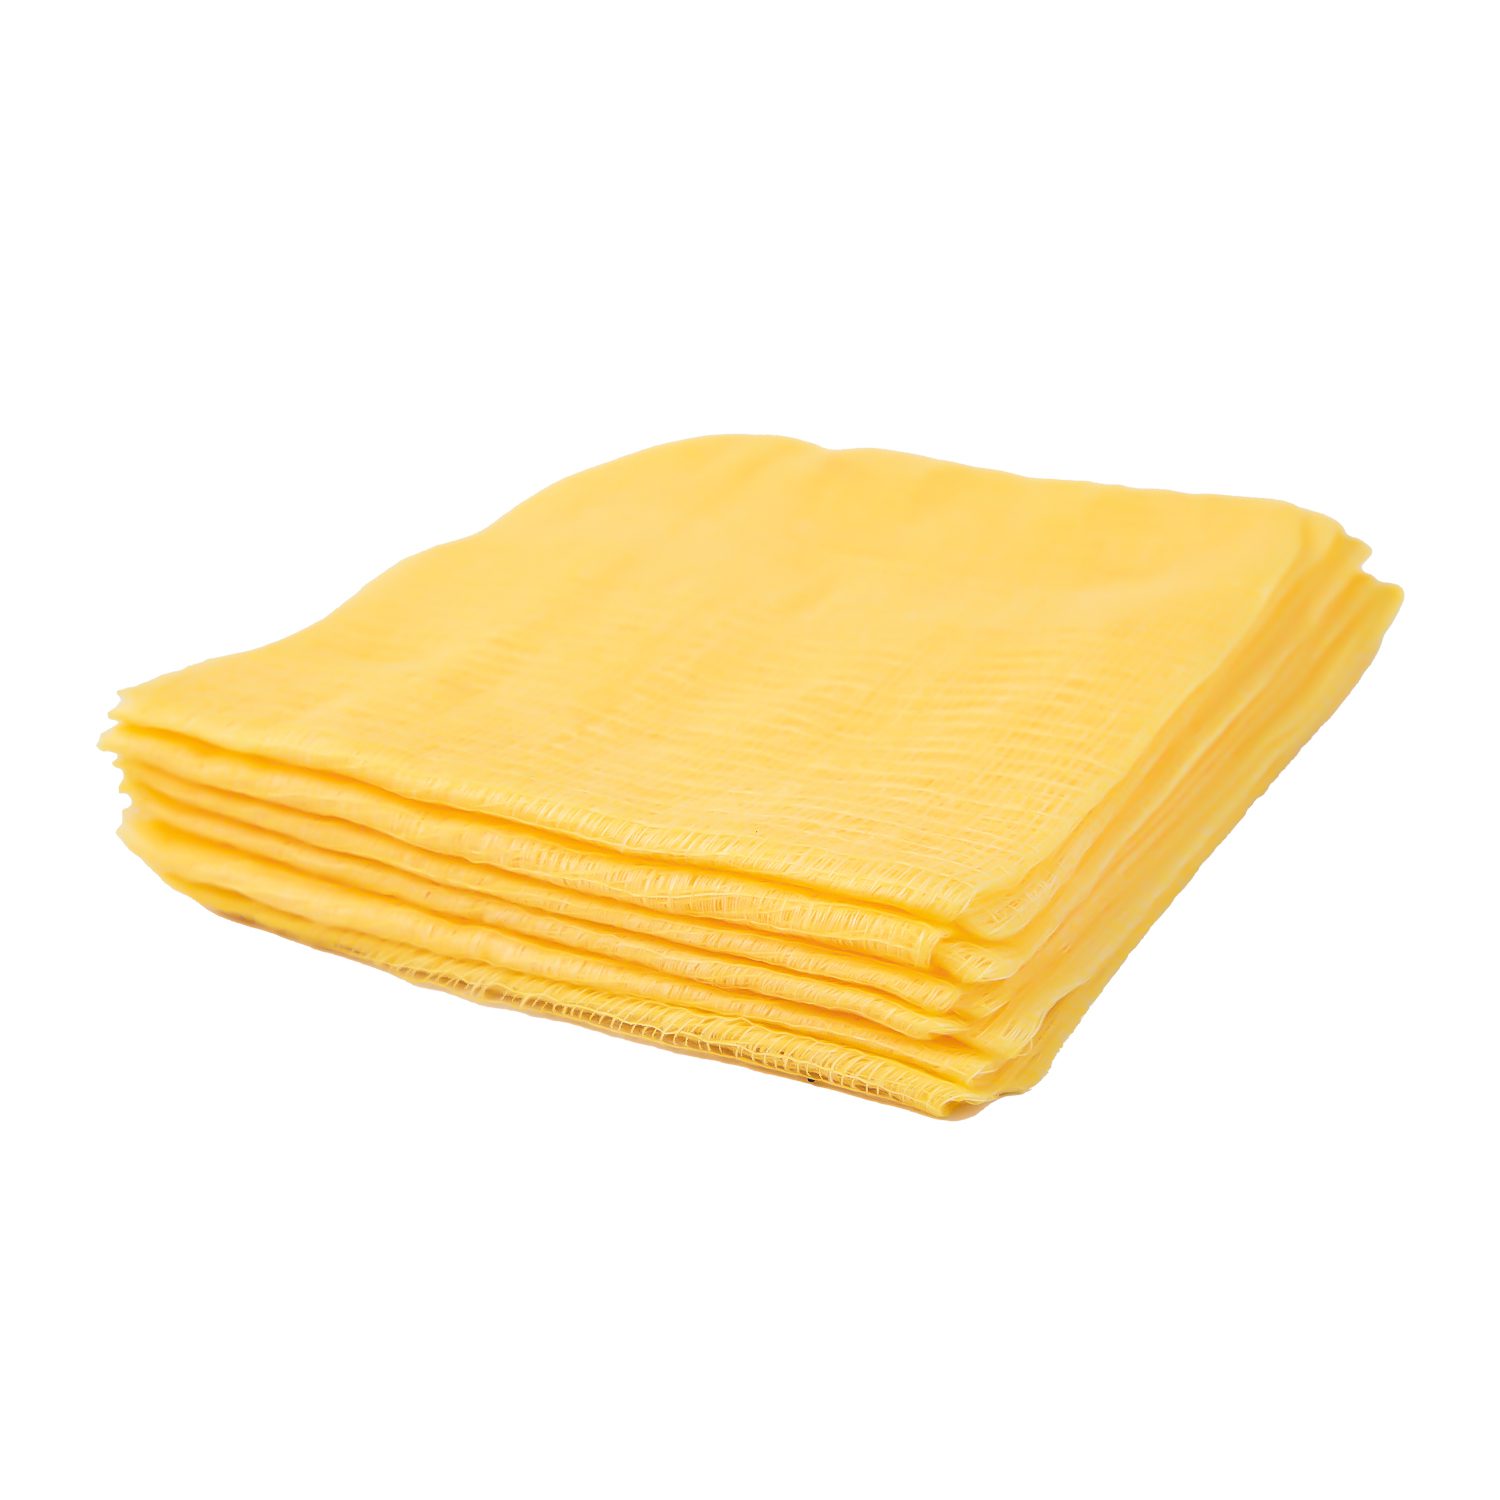 The Yellow Polishing Cloth - Bulk, Packaged, Tubes